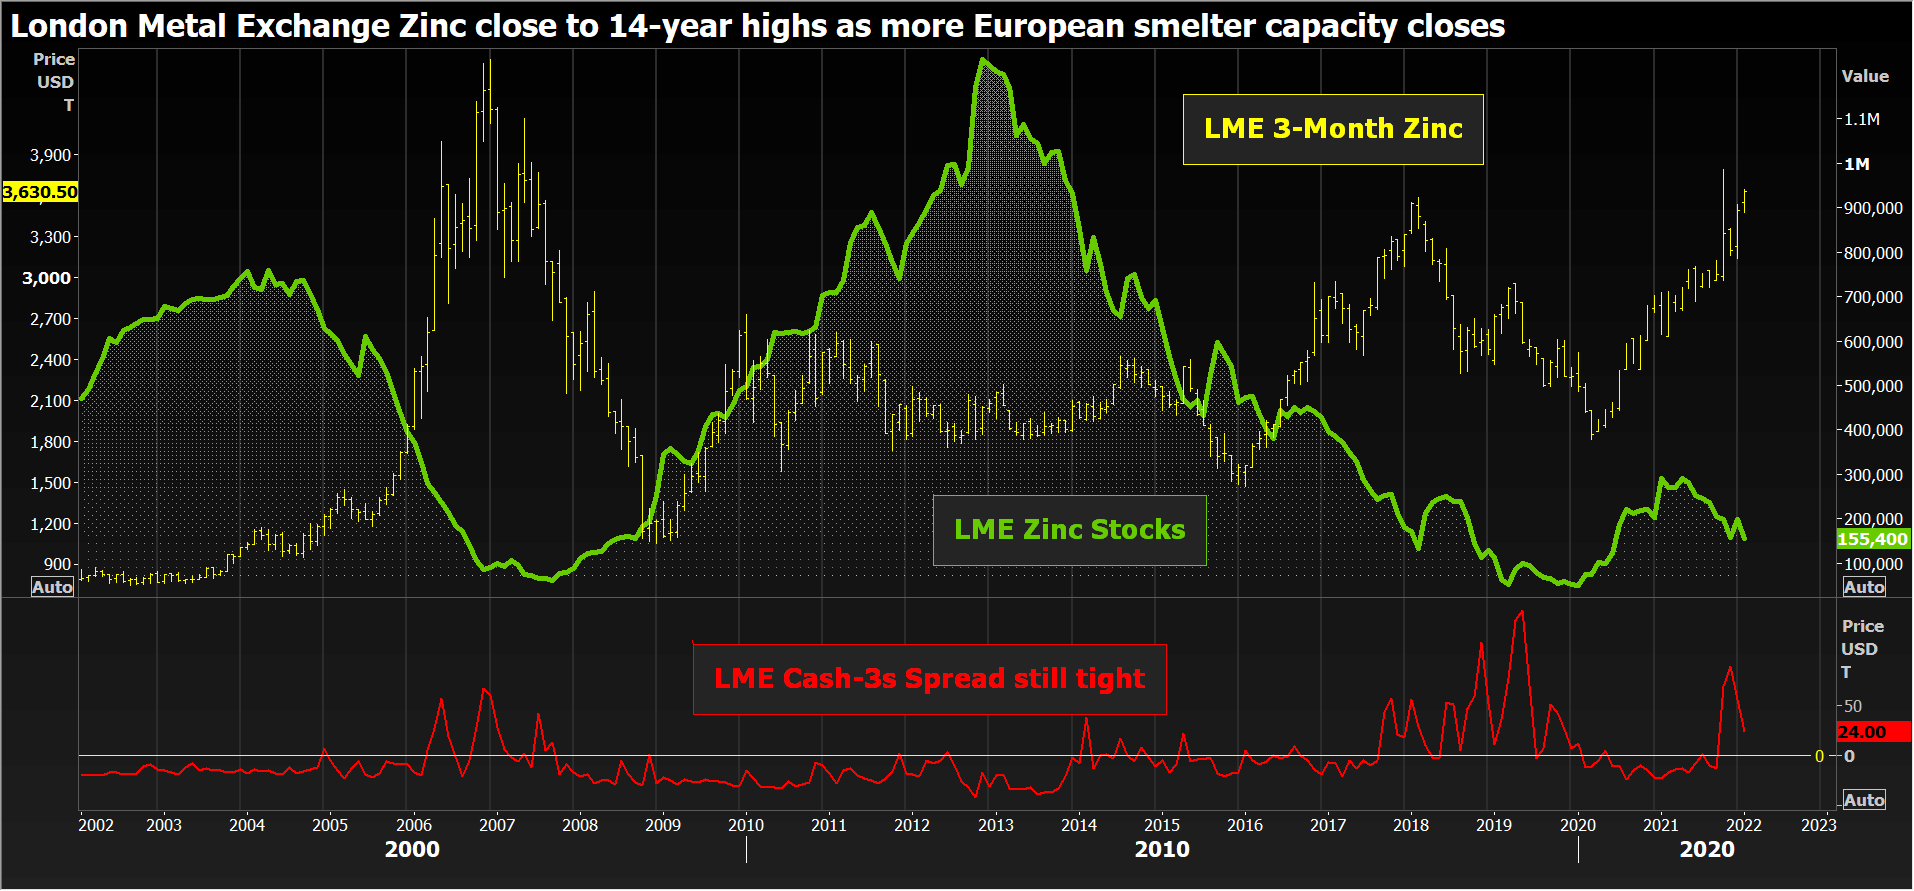 LME zinc price, stocks and cash-3s spread